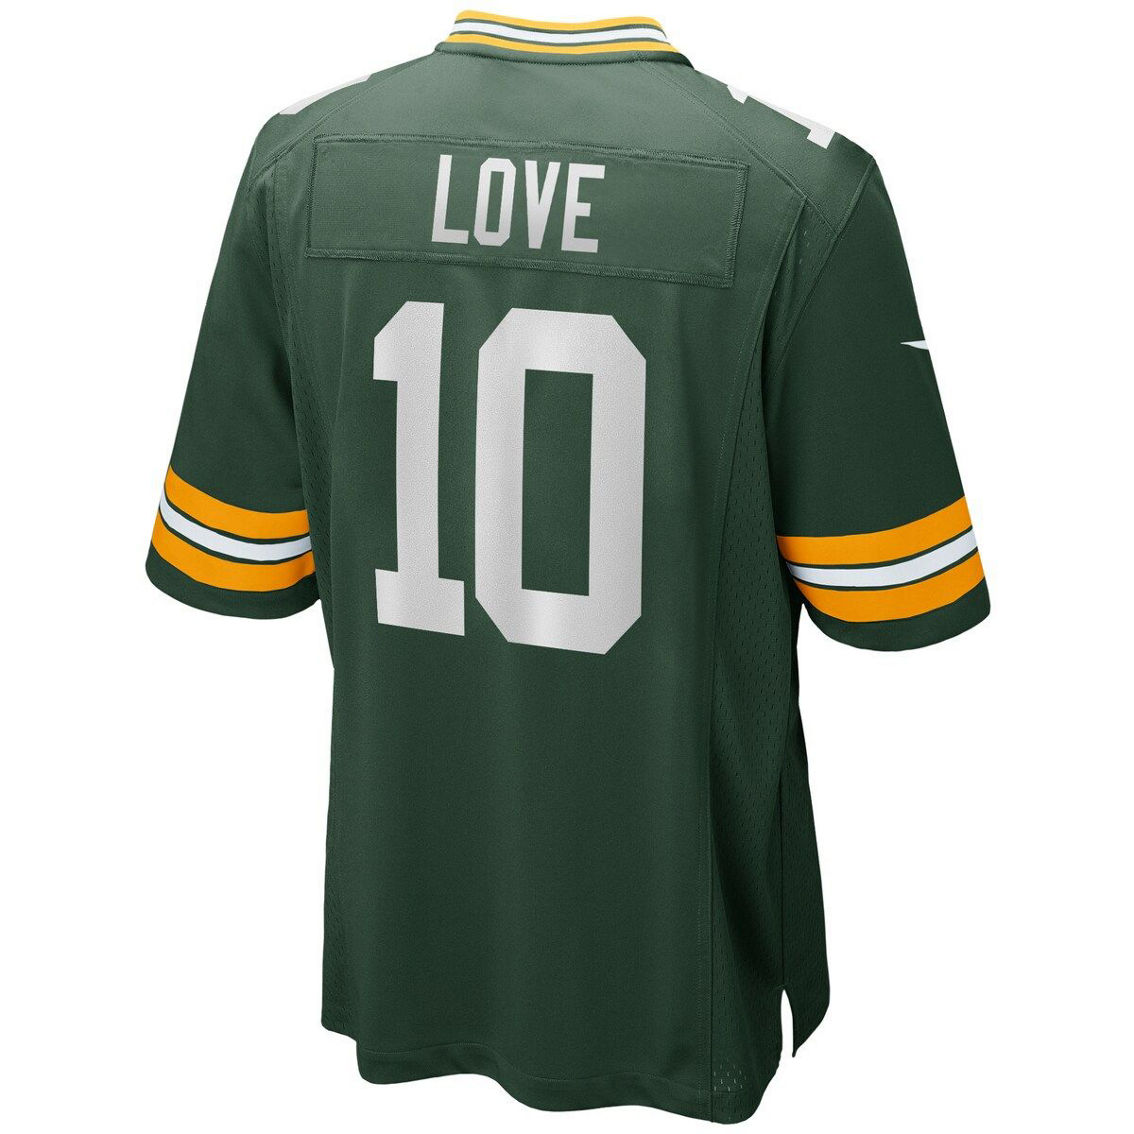 Nike Men's Jordan Love Green Green Bay Packers Player Game Jersey - Image 4 of 4